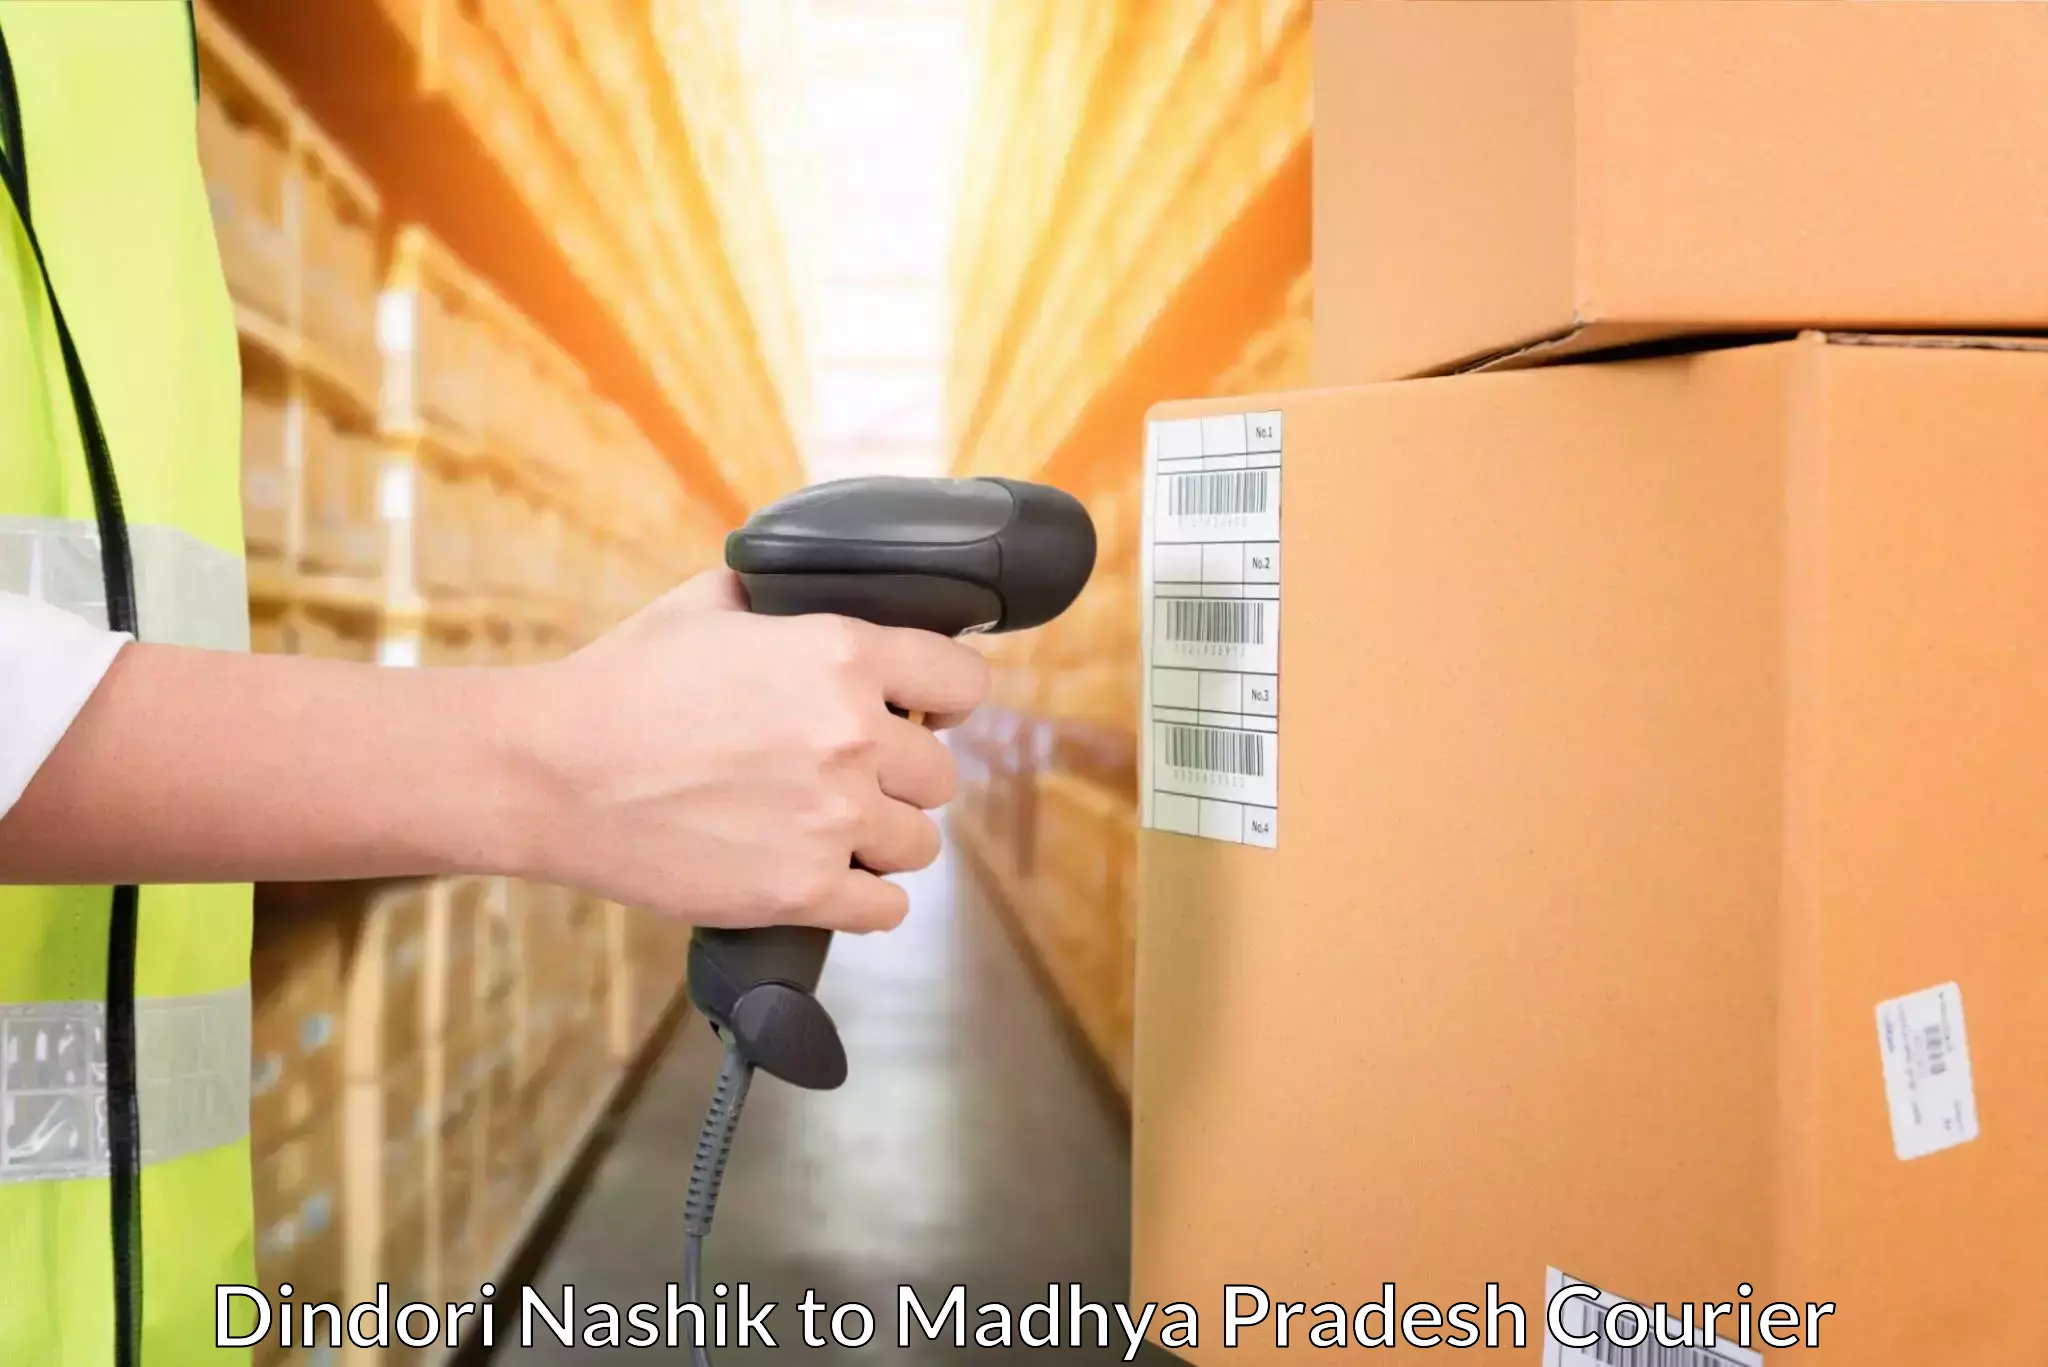 Cargo delivery service Dindori Nashik to Jhabua